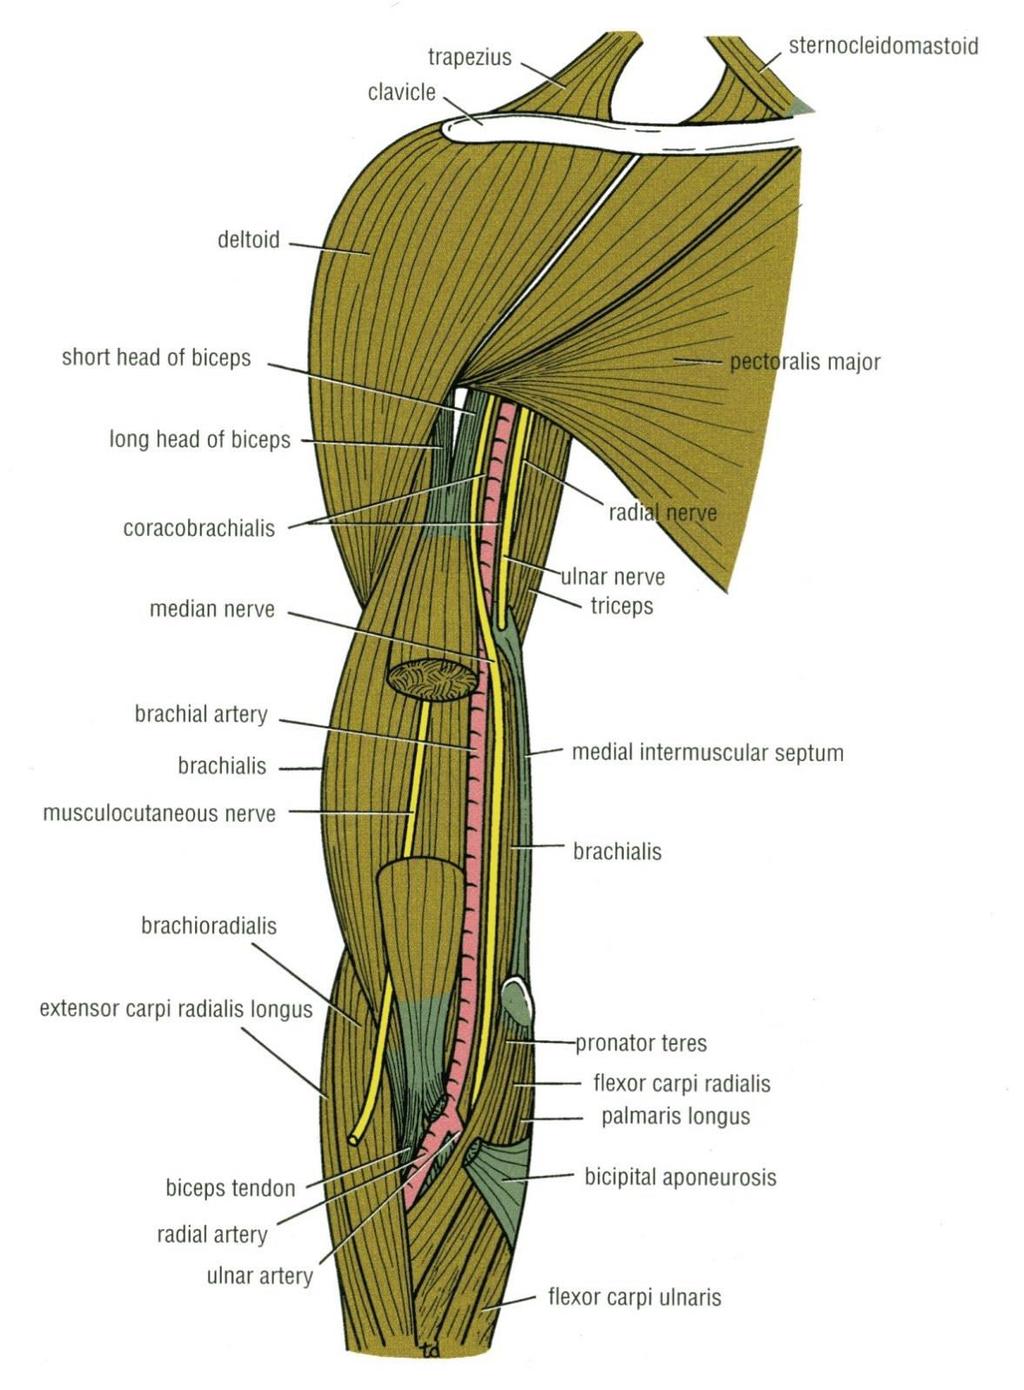 Median nerve - C5,C6,C7 + C8,T1 Origin: 2 roots - medial & lateral cords of brachial plexus.